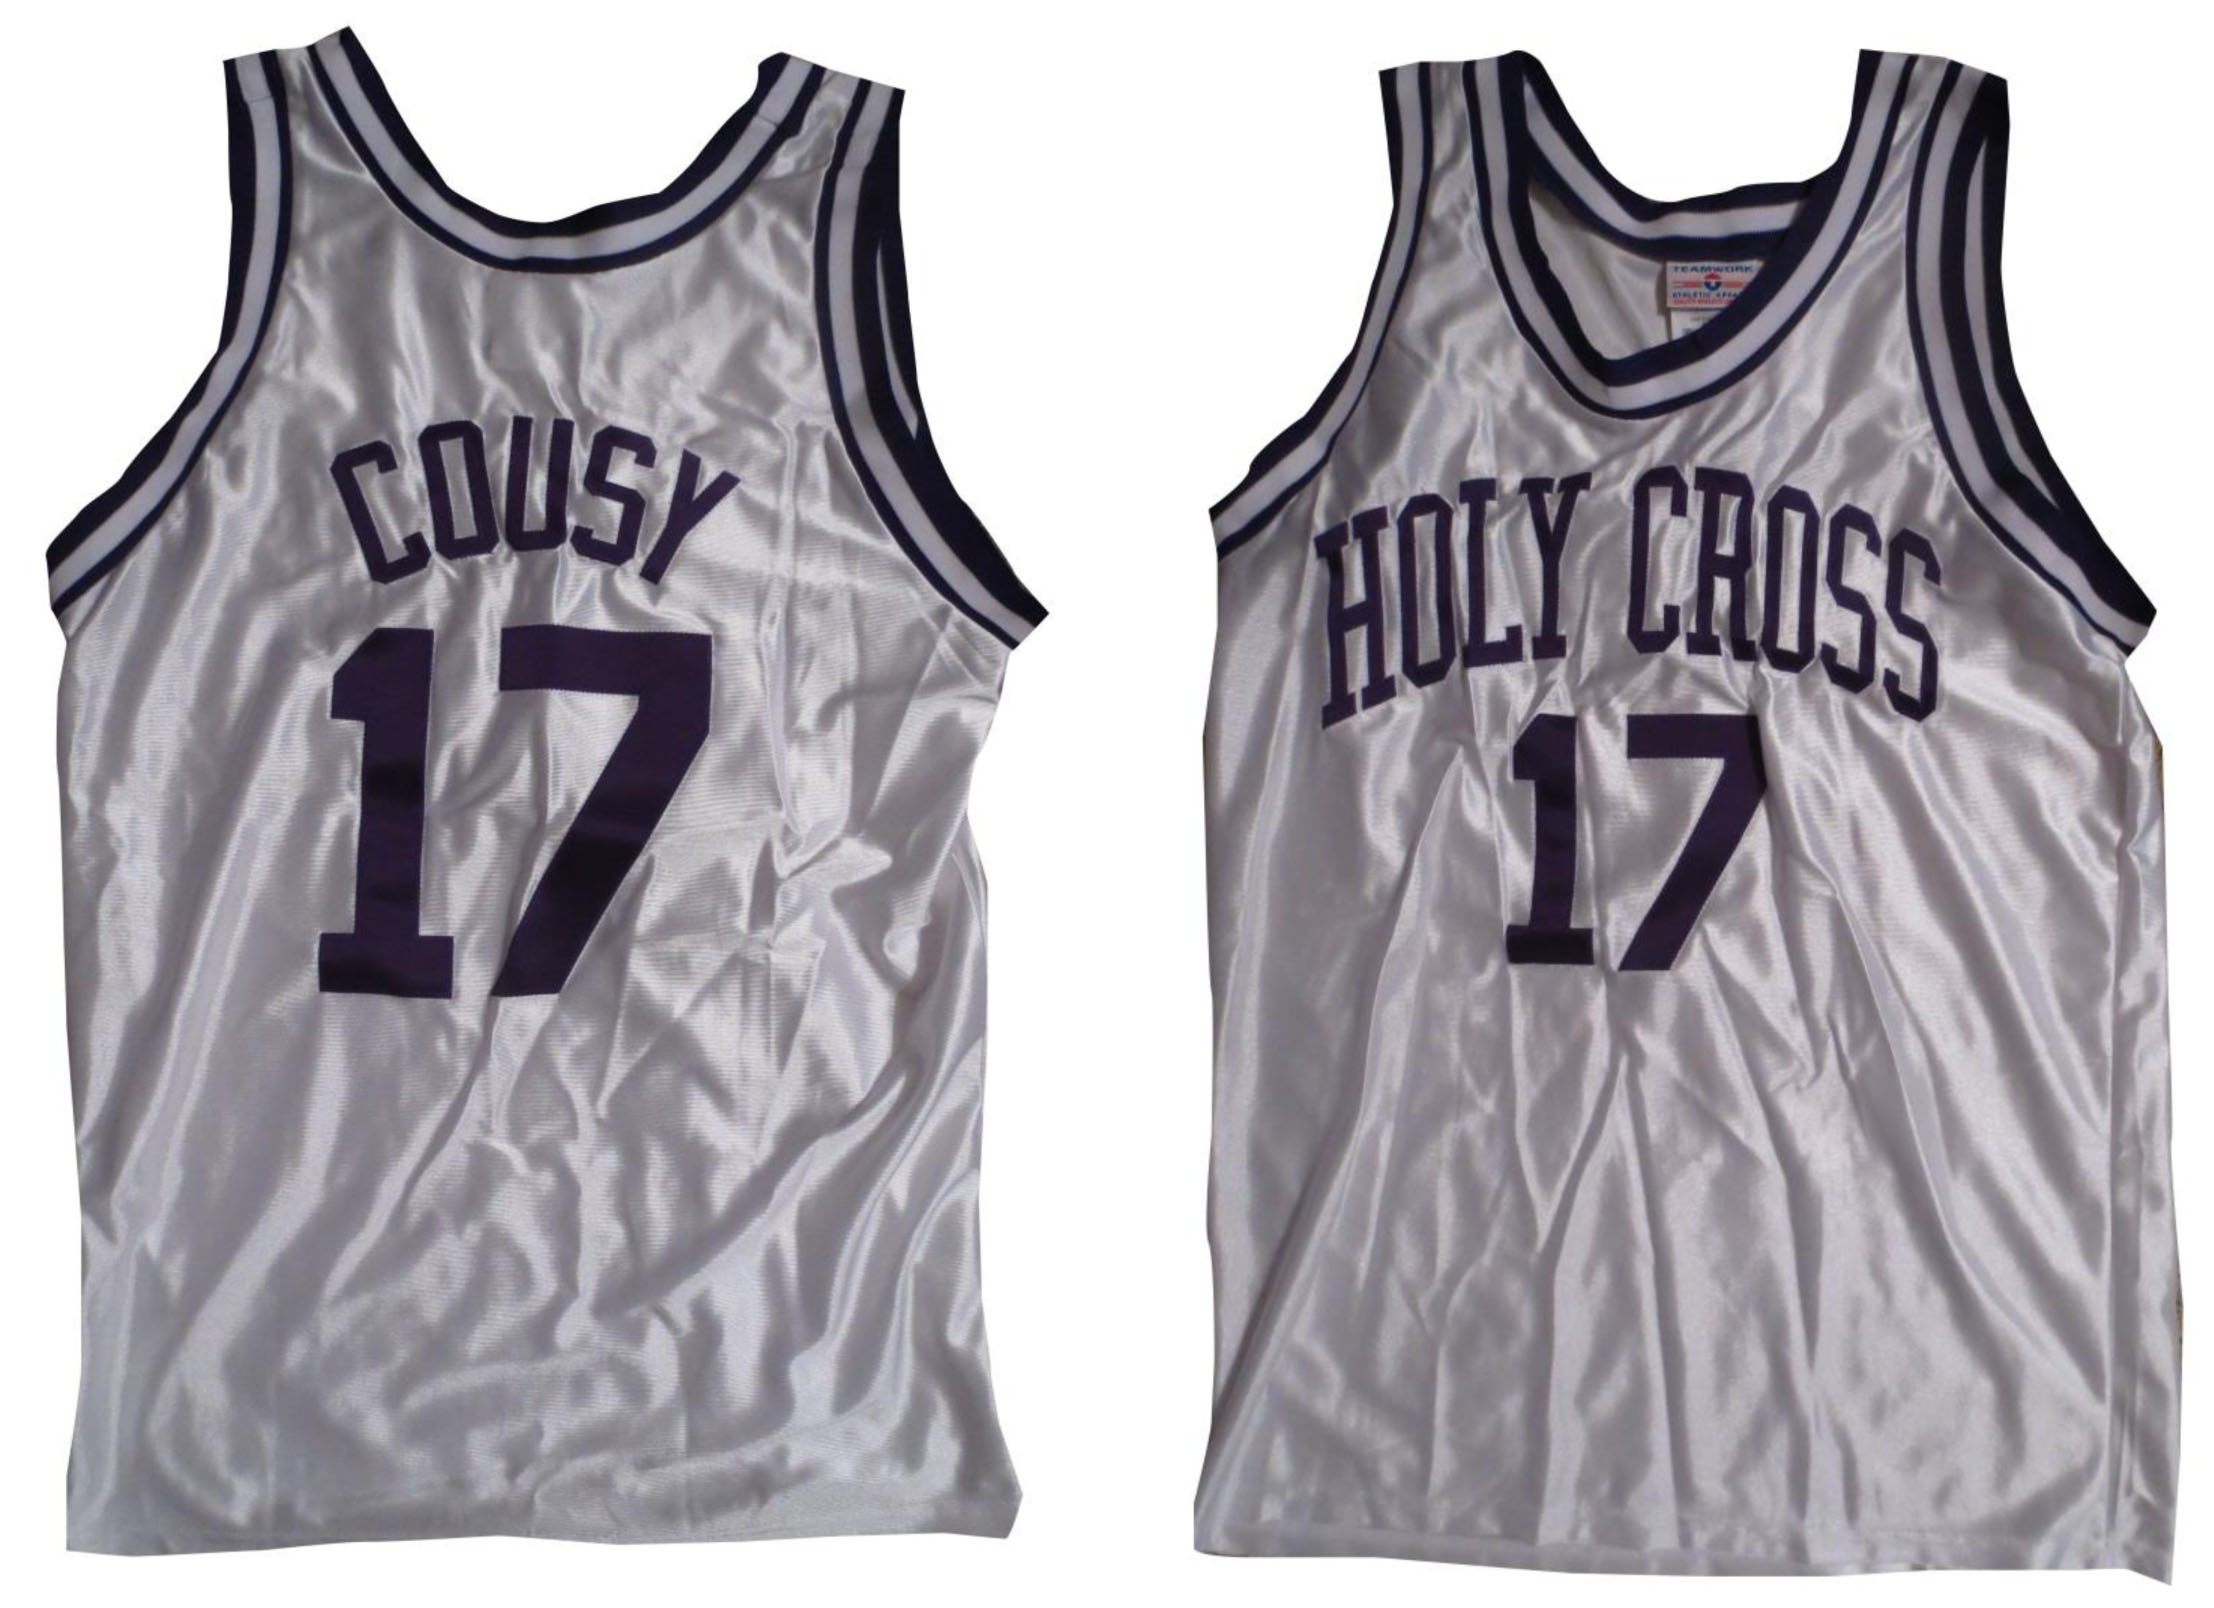 holy cross basketball jersey